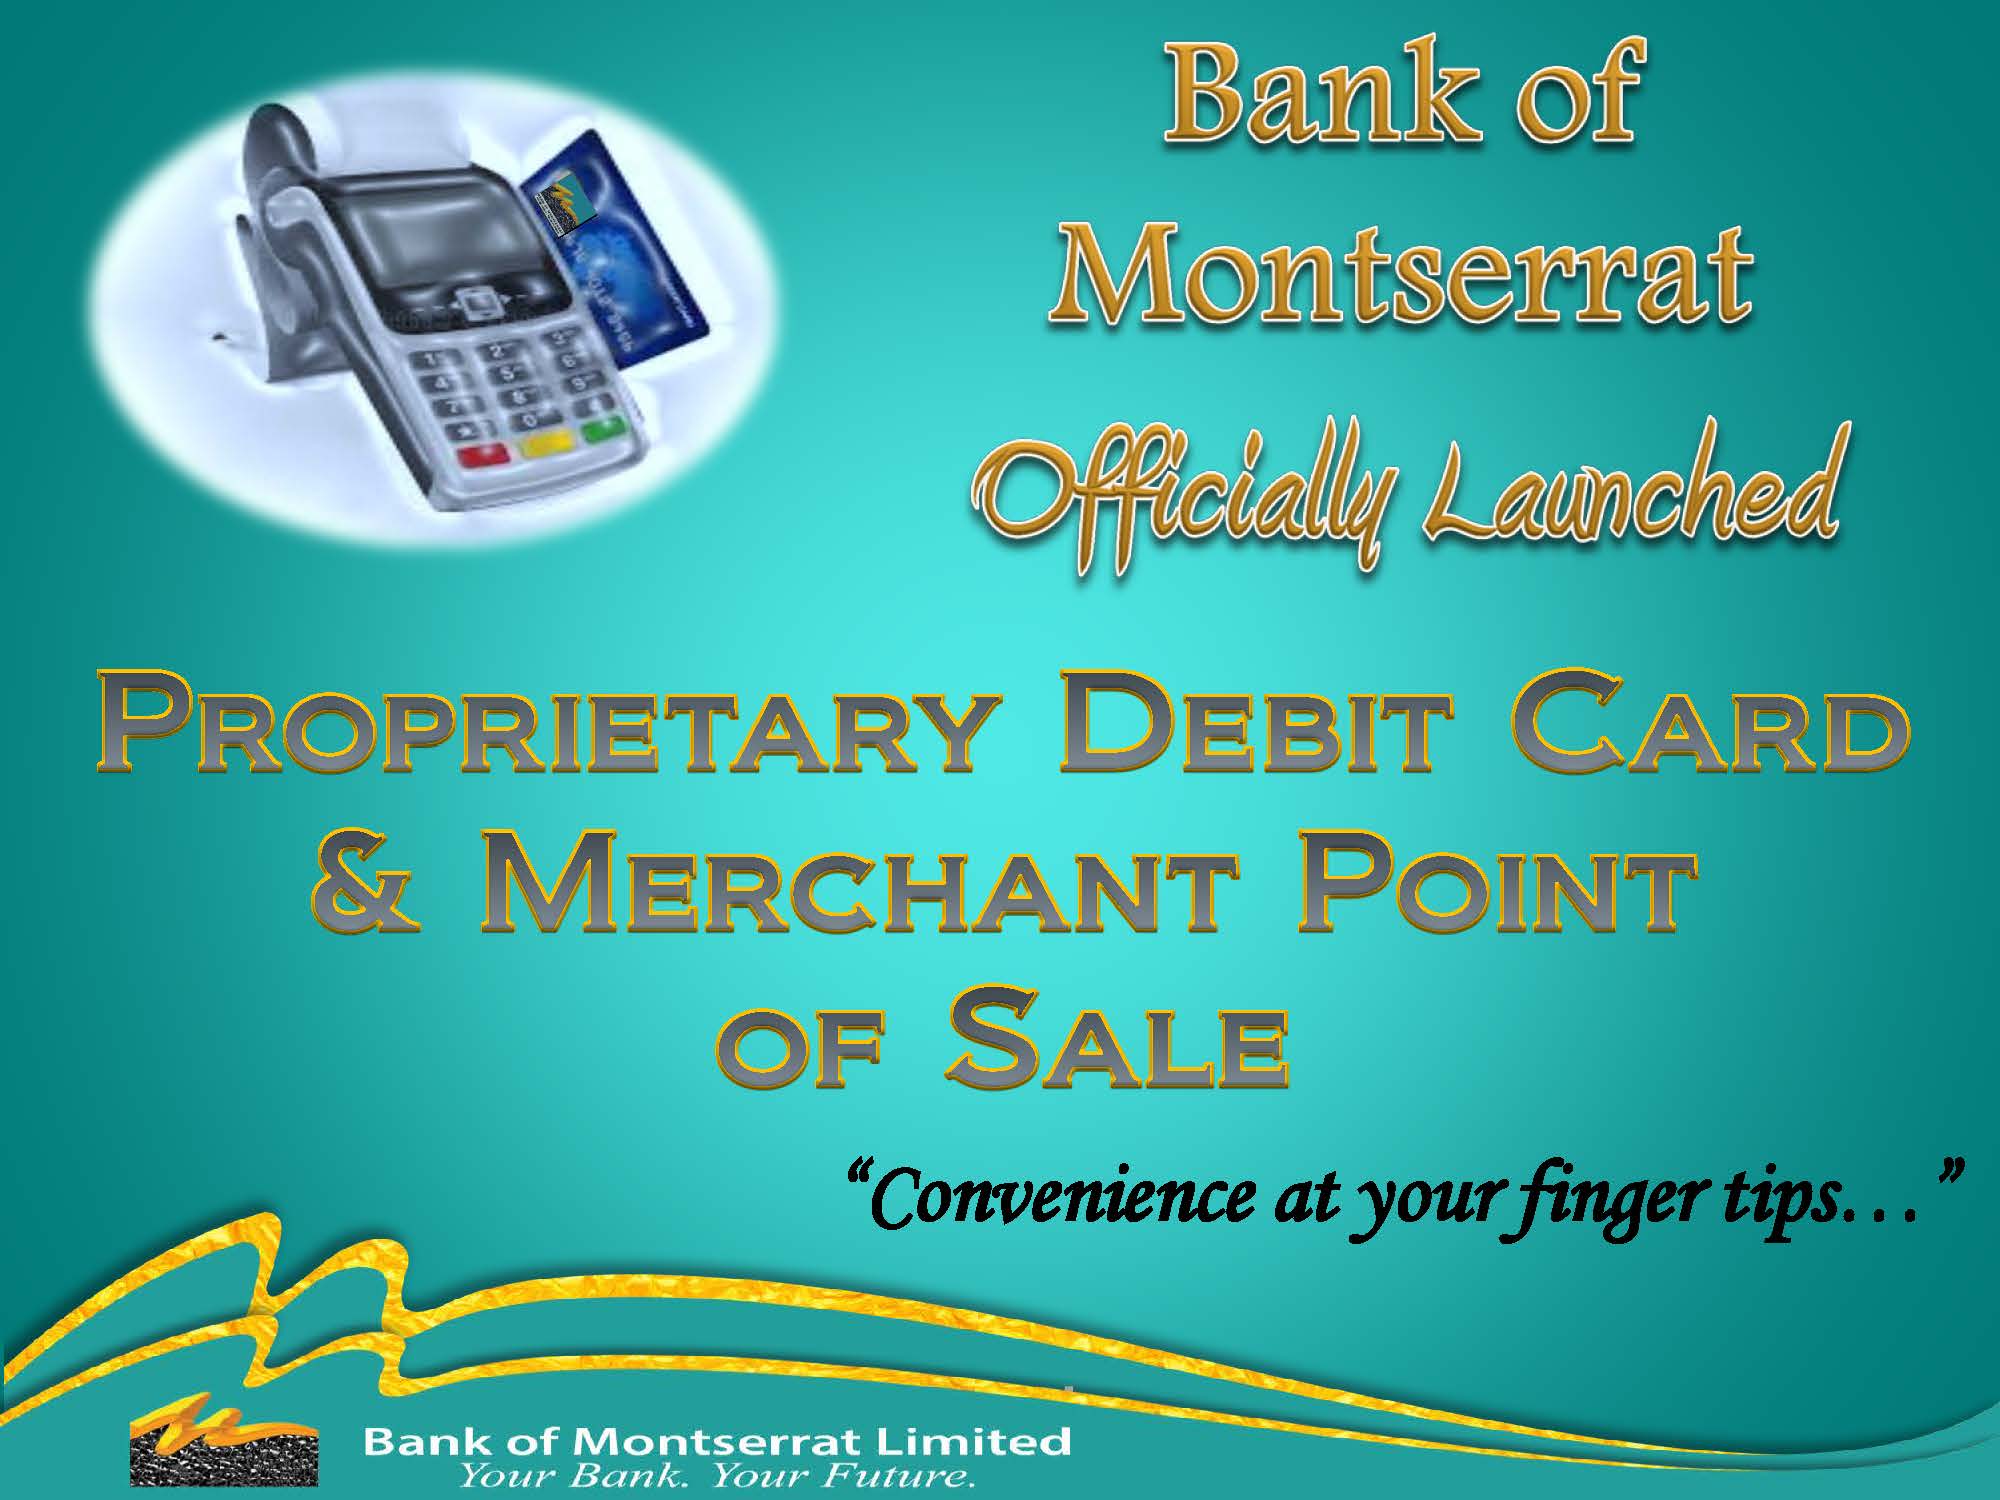 Bank of Montserrat